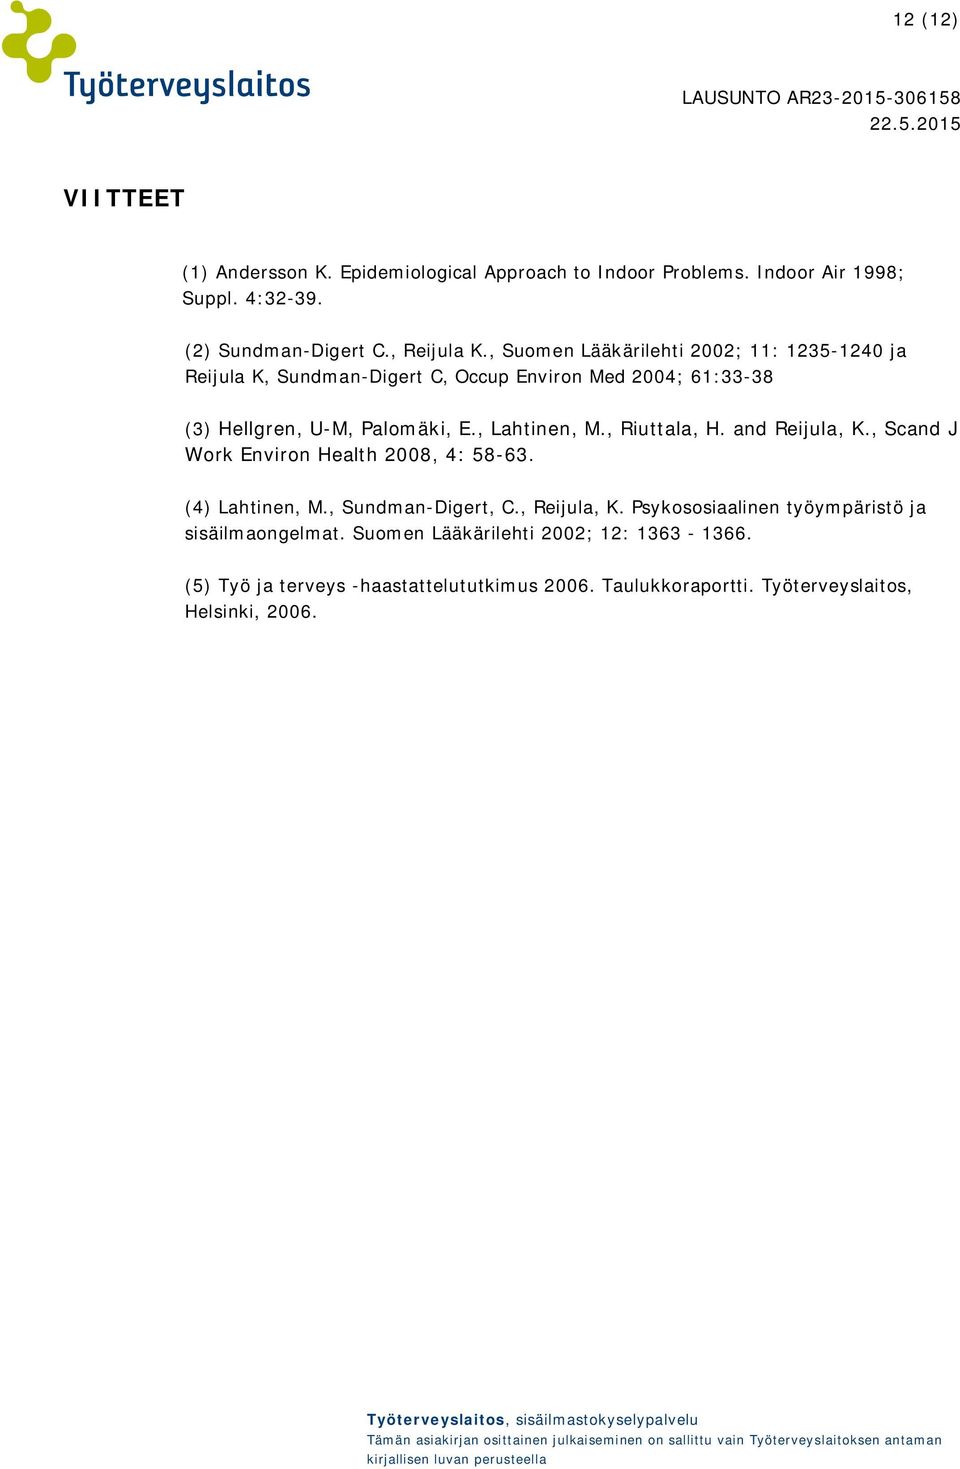 , Riuttala, H. and Reijula, K., Scand J Work Environ Health 2008, 4: 58-63. (4) Lahtinen, M., Sundman-Digert, C., Reijula, K.